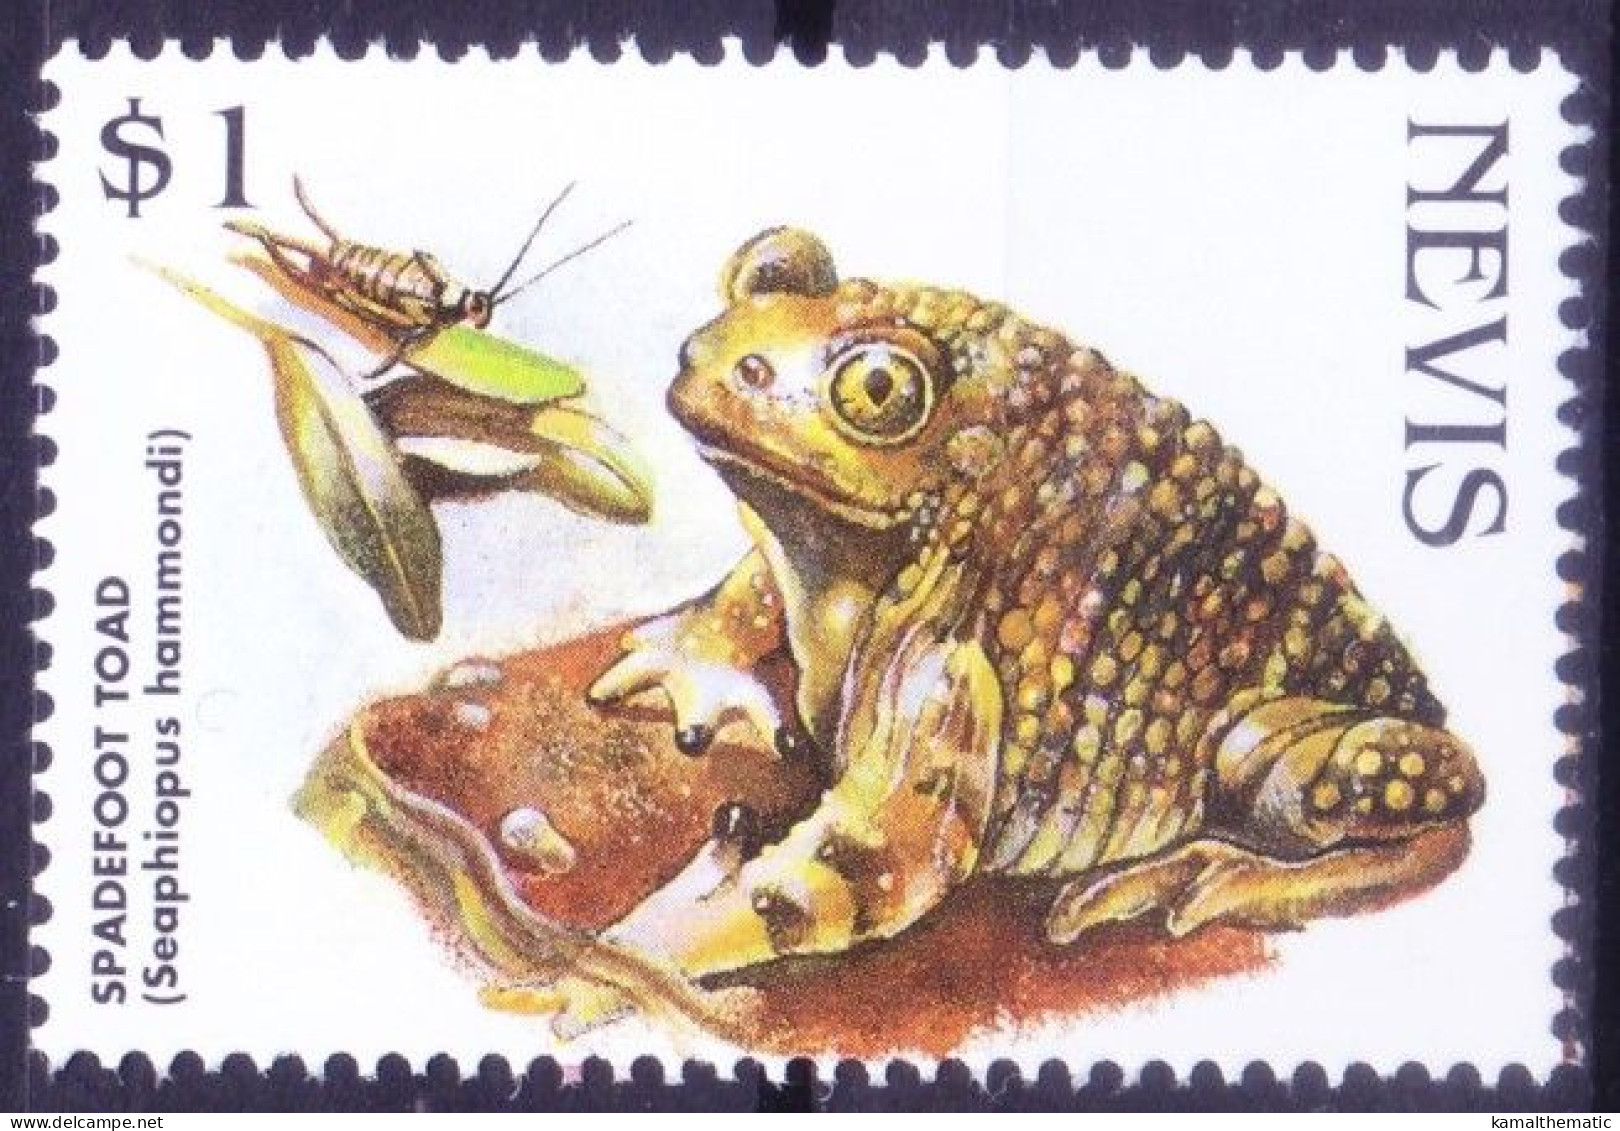 Nevis 1998 MNH, Spadefoot Toad, Frogs, Amphibians - Frogs